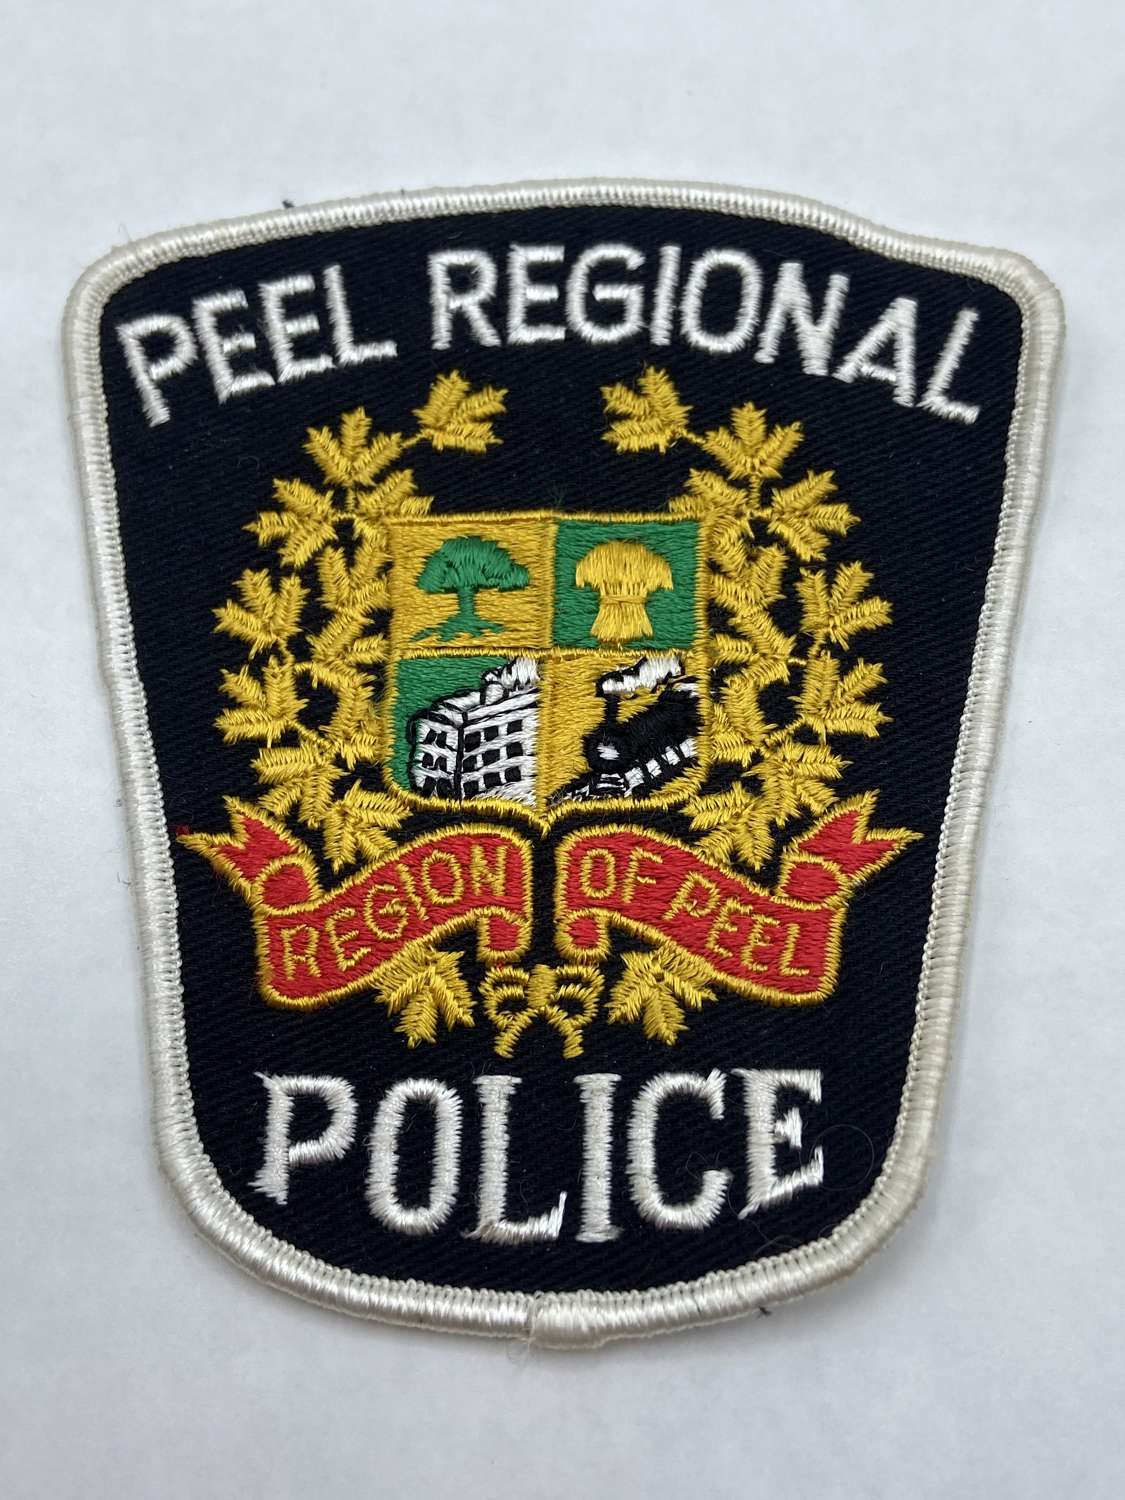 Vintage 1990s Peel Regional Canada Police Patch